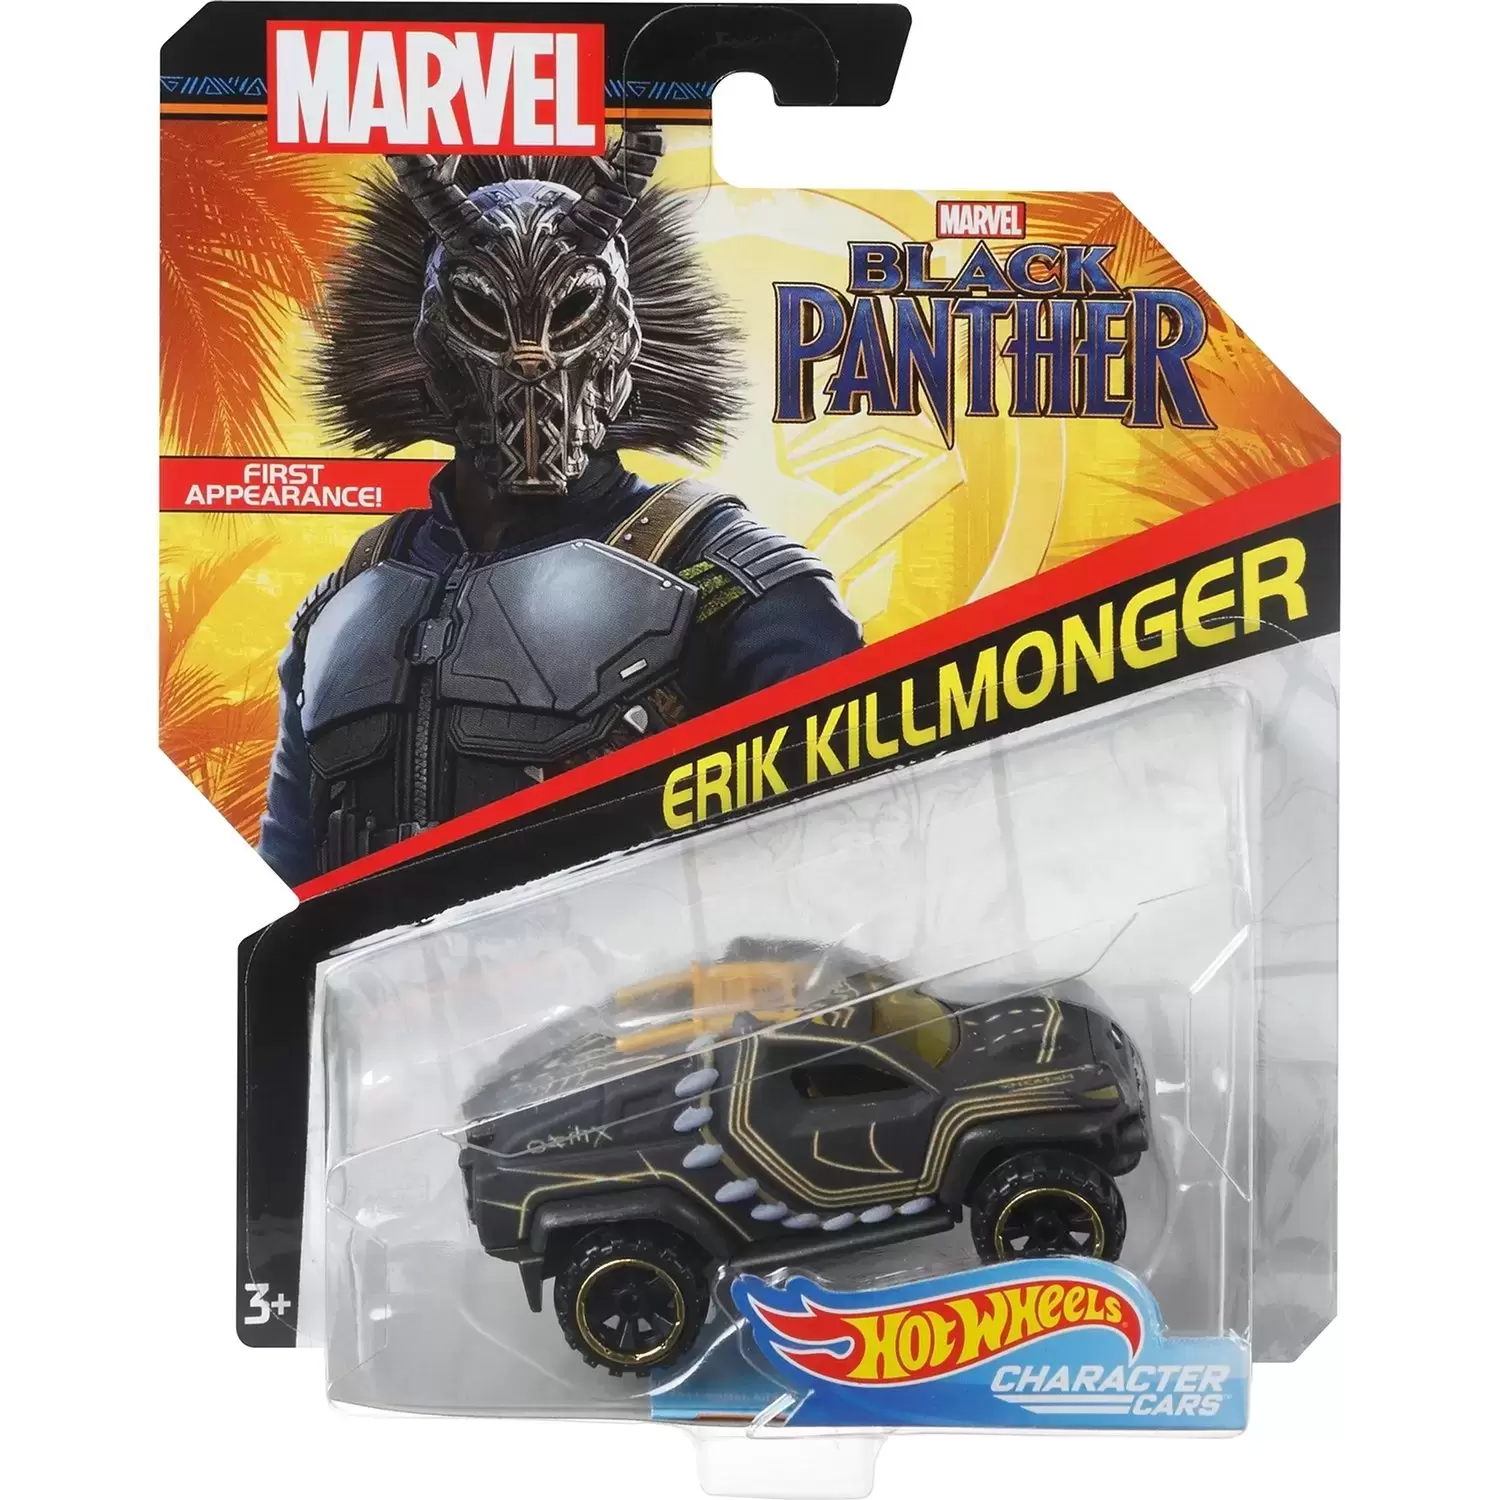 Marvel Character Cars - Black Panther - Erik Killmonger